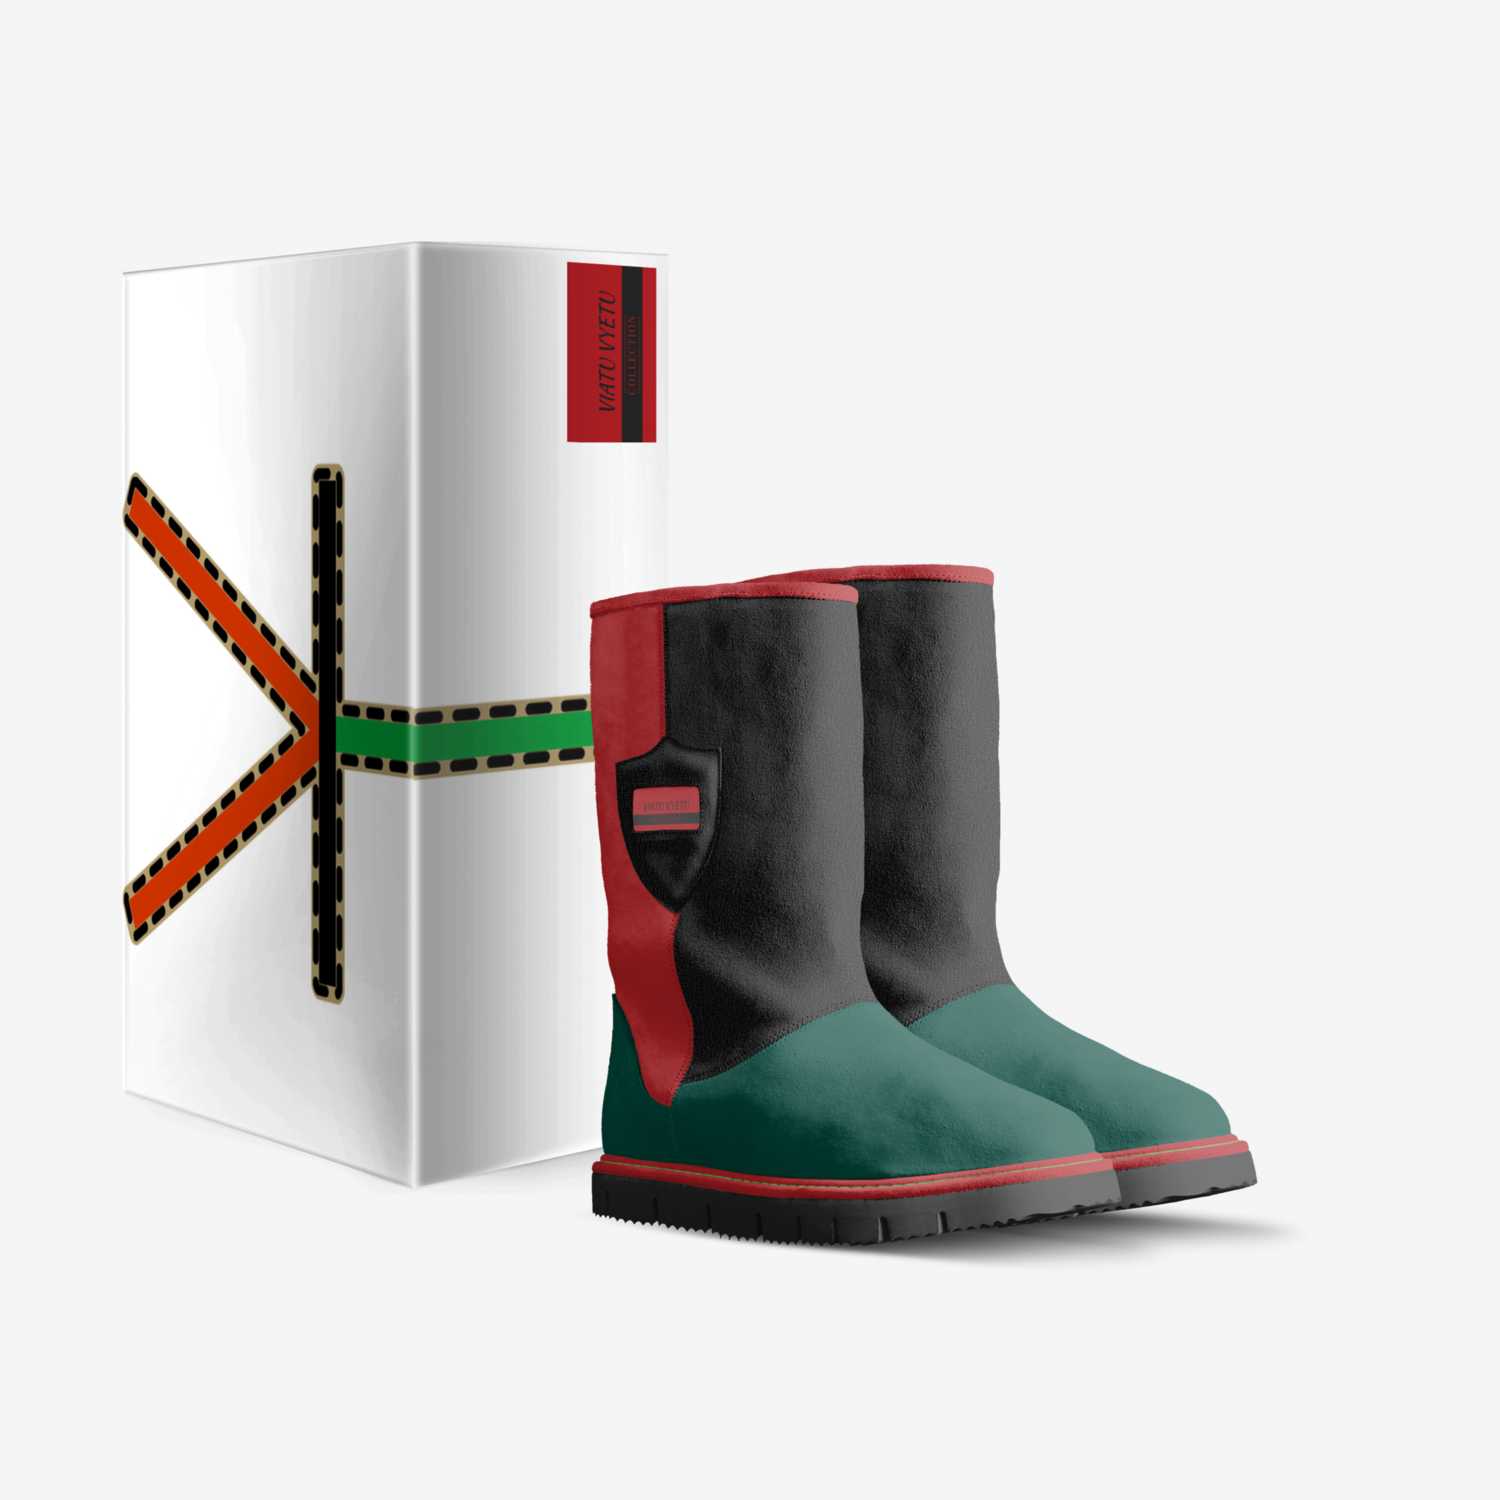 Mahiri custom made in Italy shoes by Scott Thomas | Box view